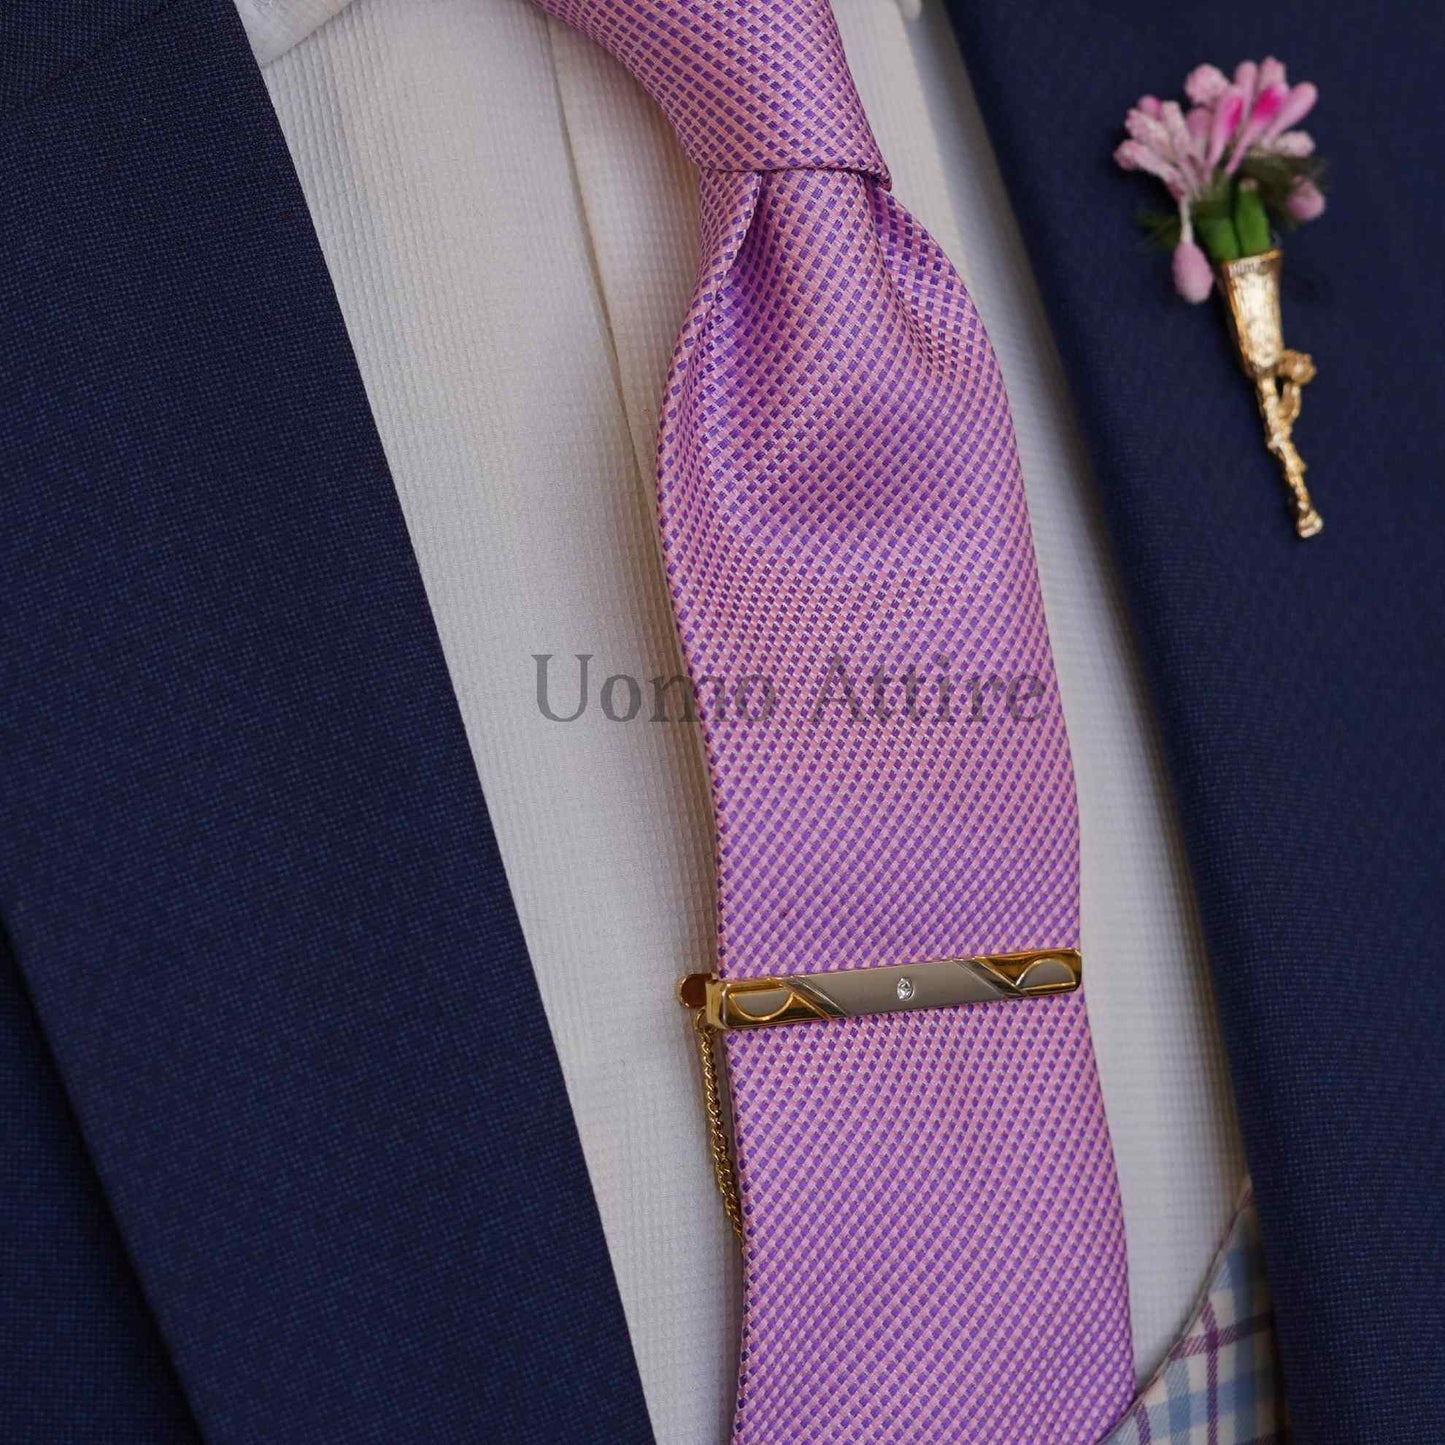 Golden tie pin for sophisticated look | Tie Pins